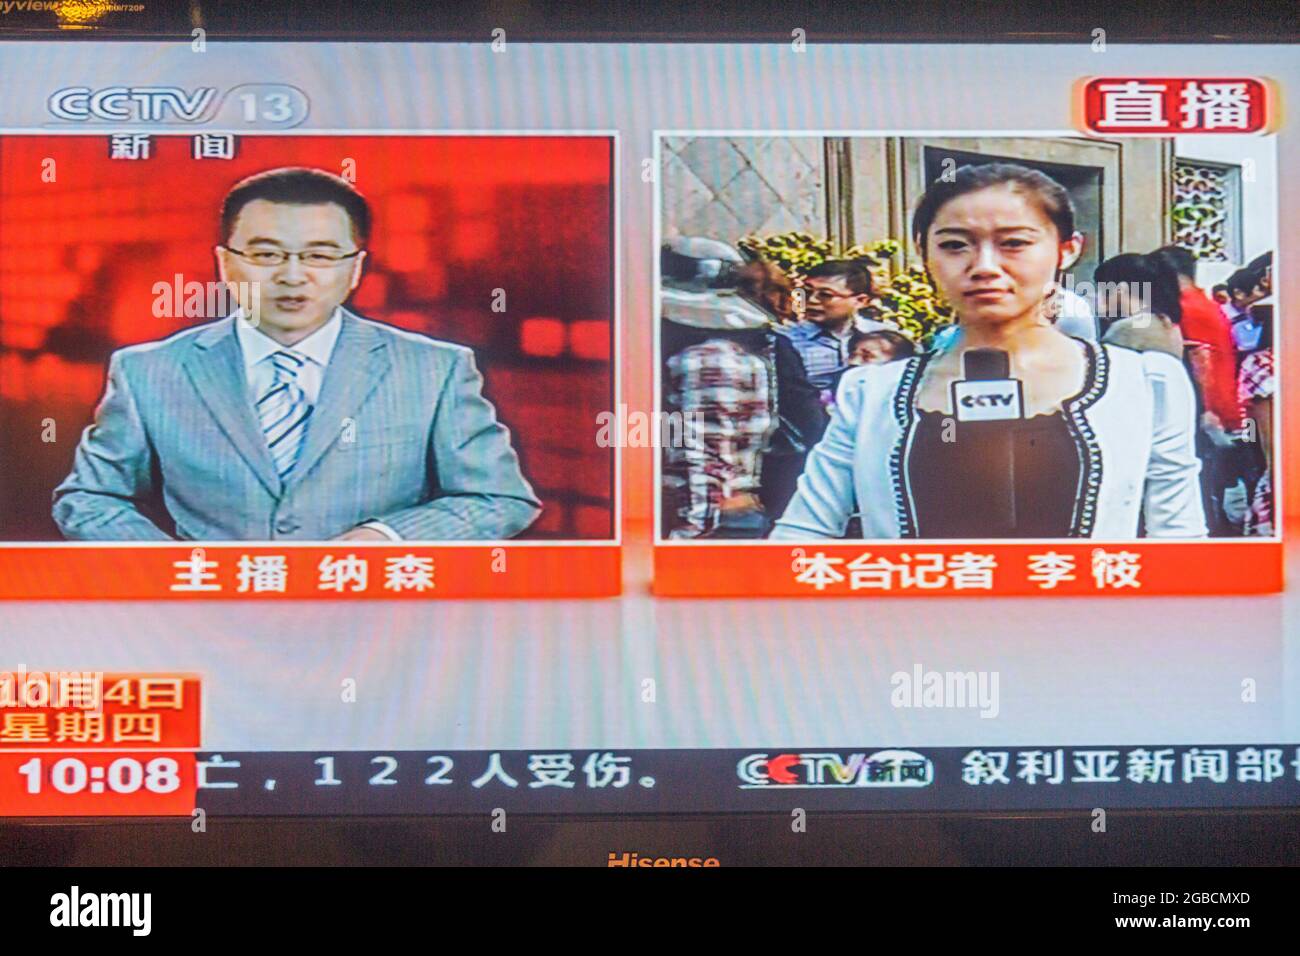 Shanghai China, Oriental, televisión pantalla plana monitor de televisión  chino Mandarin hanzi, mujer asiática hombre hombre hombre hombre hombre  CCTV 13, periodista de noticias reportero en Fotografía de stock - Alamy